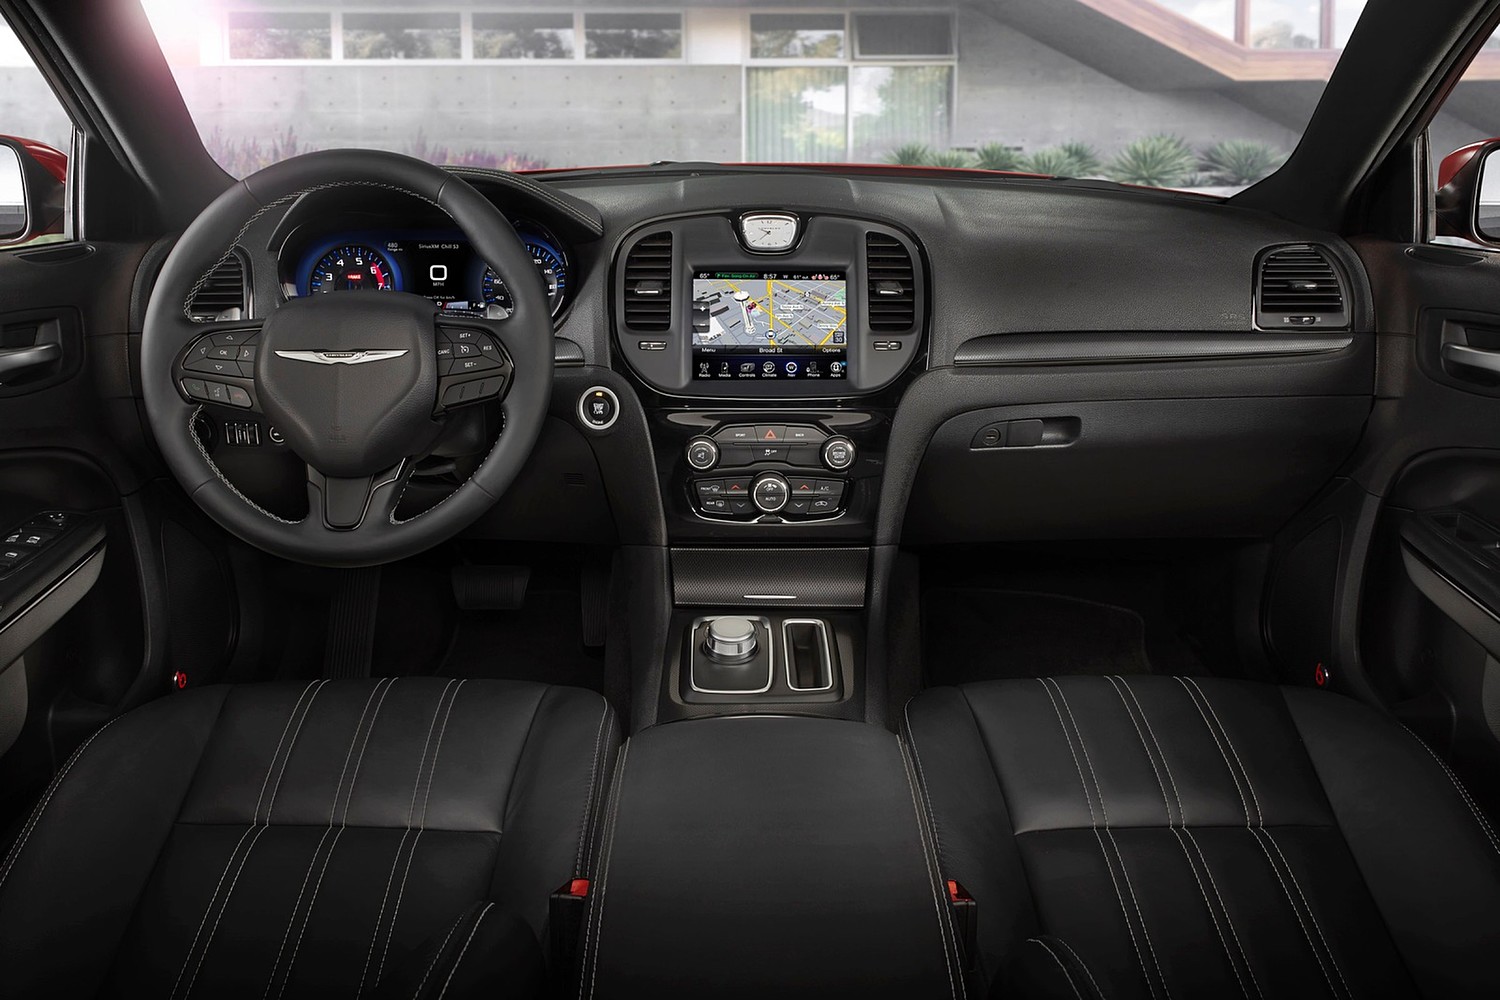 Chrysler 300 S Sedan Dashboard (2016 model year shown)